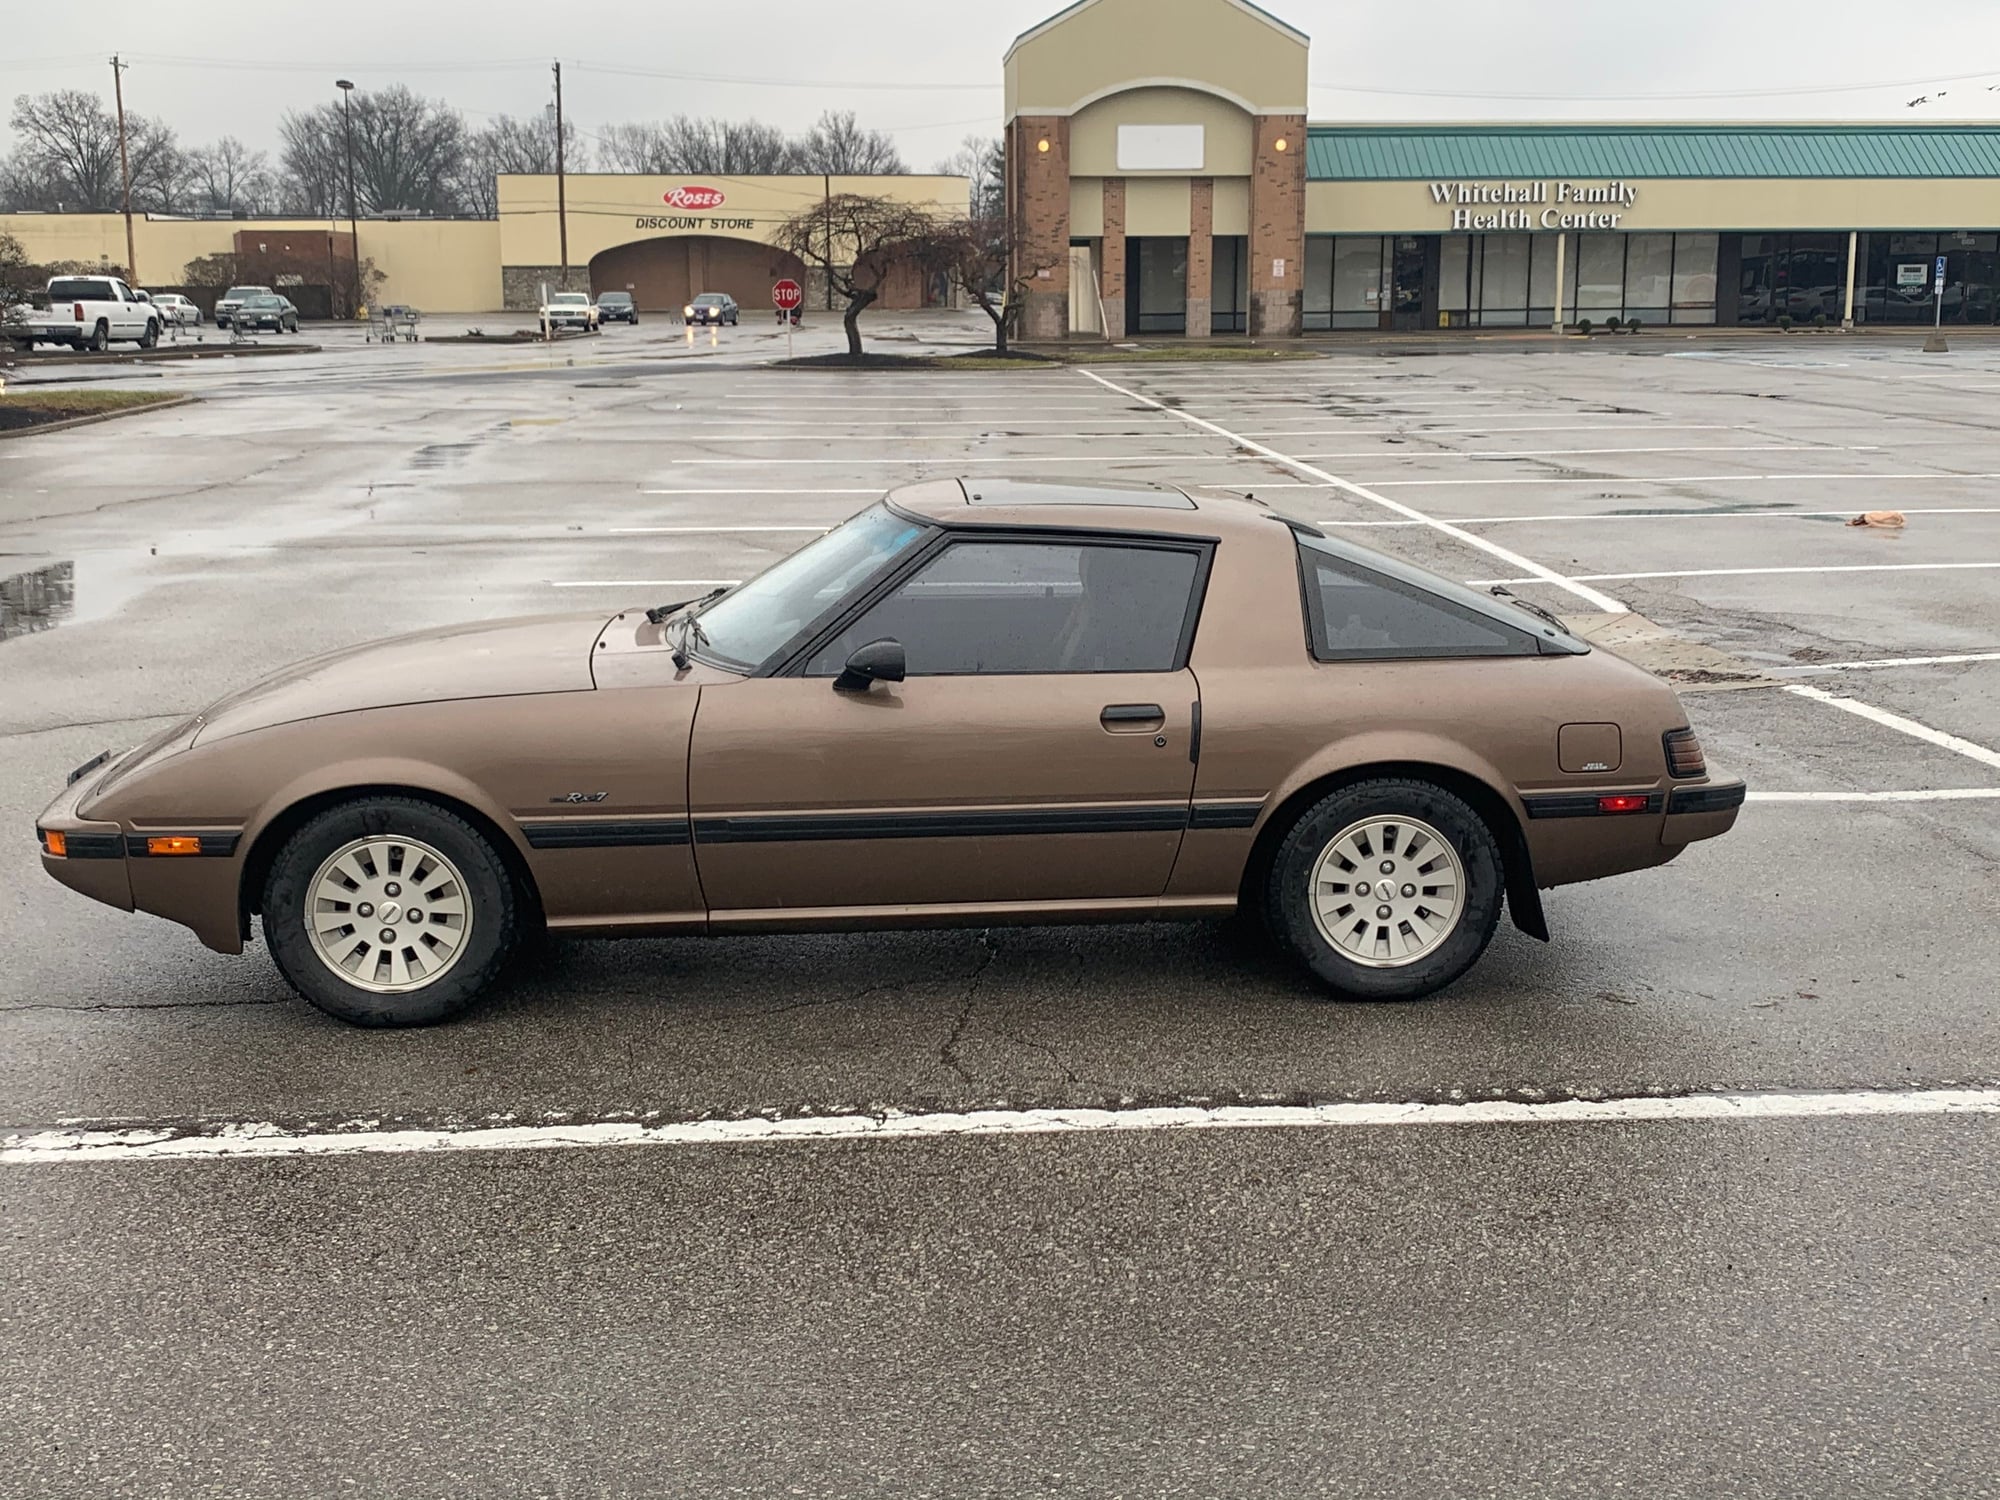 1985 Mazda RX-7 - 1985 Mazda RX7 - Used - Columbus, OH 43123, United States